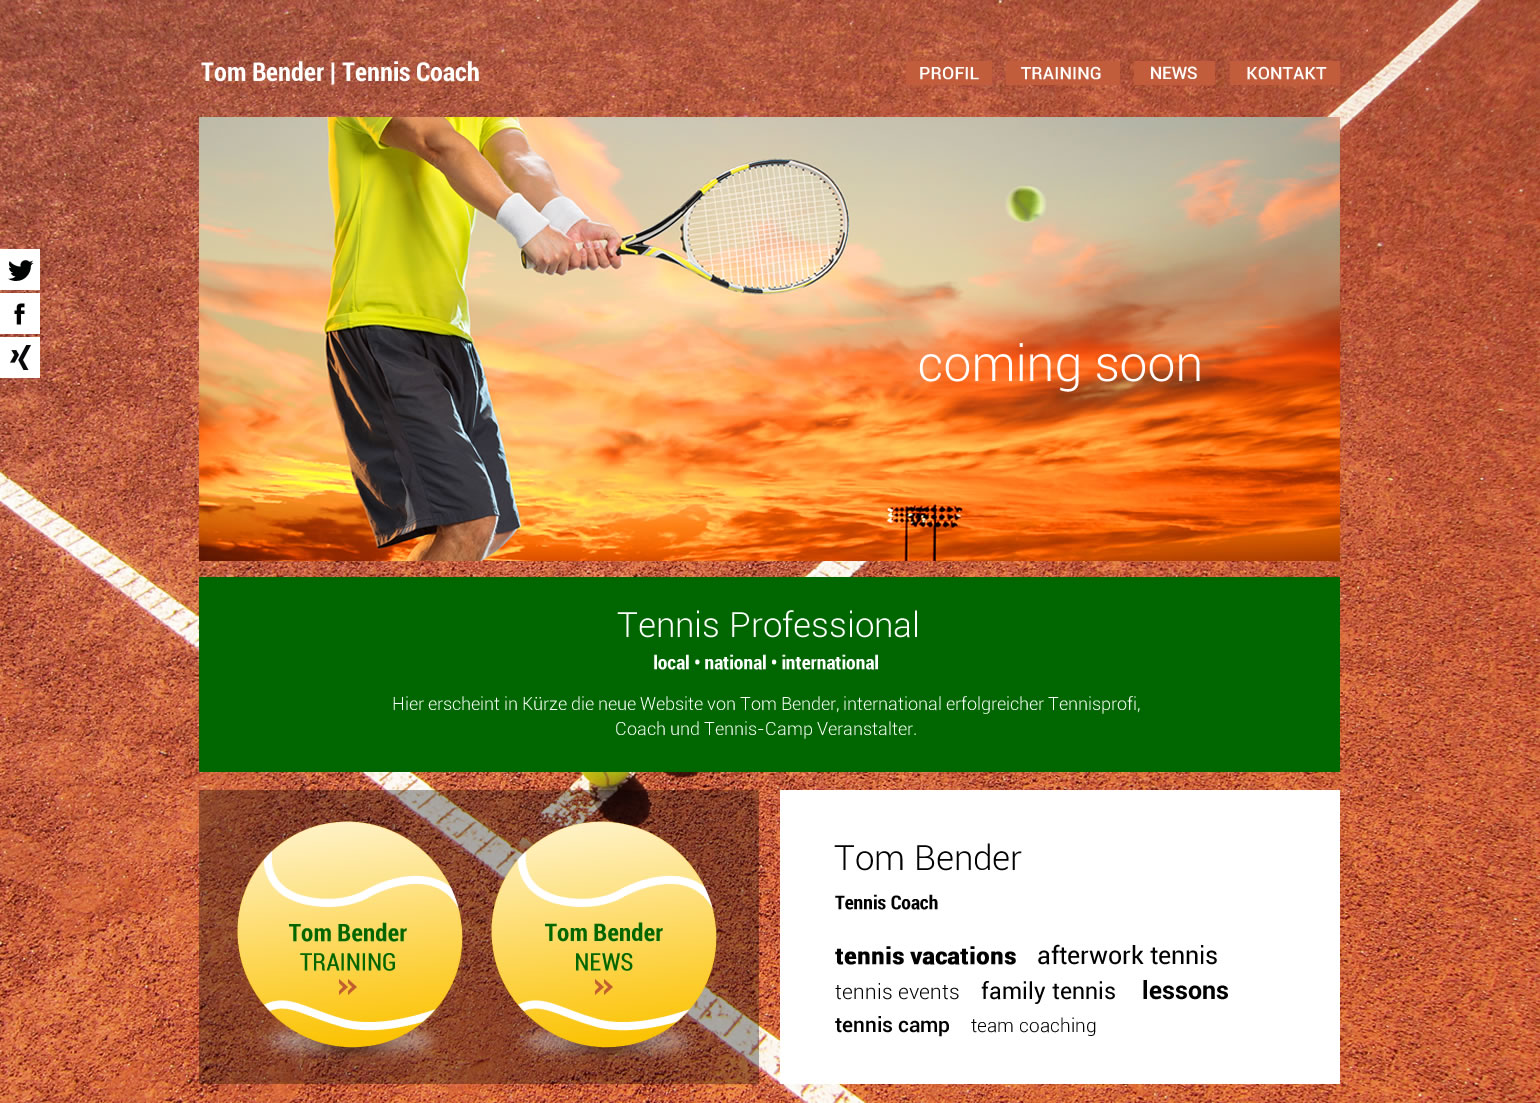 Tom Bender Tennis Coach